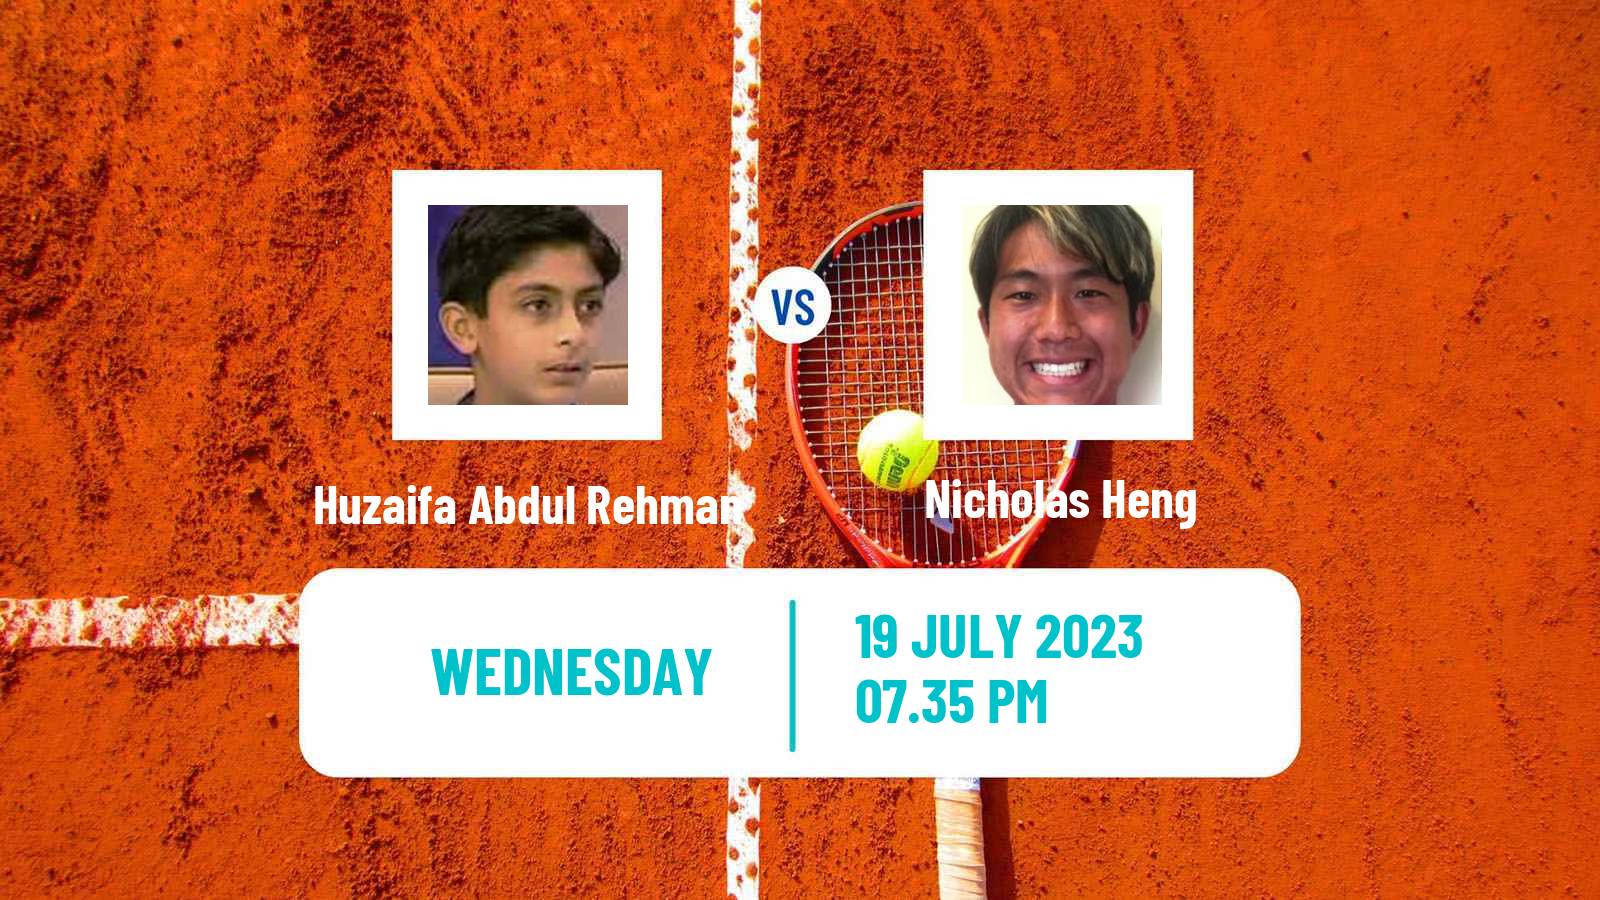 Tennis ITF M15 Rochester Ny Men Huzaifa Abdul Rehman - Nicholas Heng